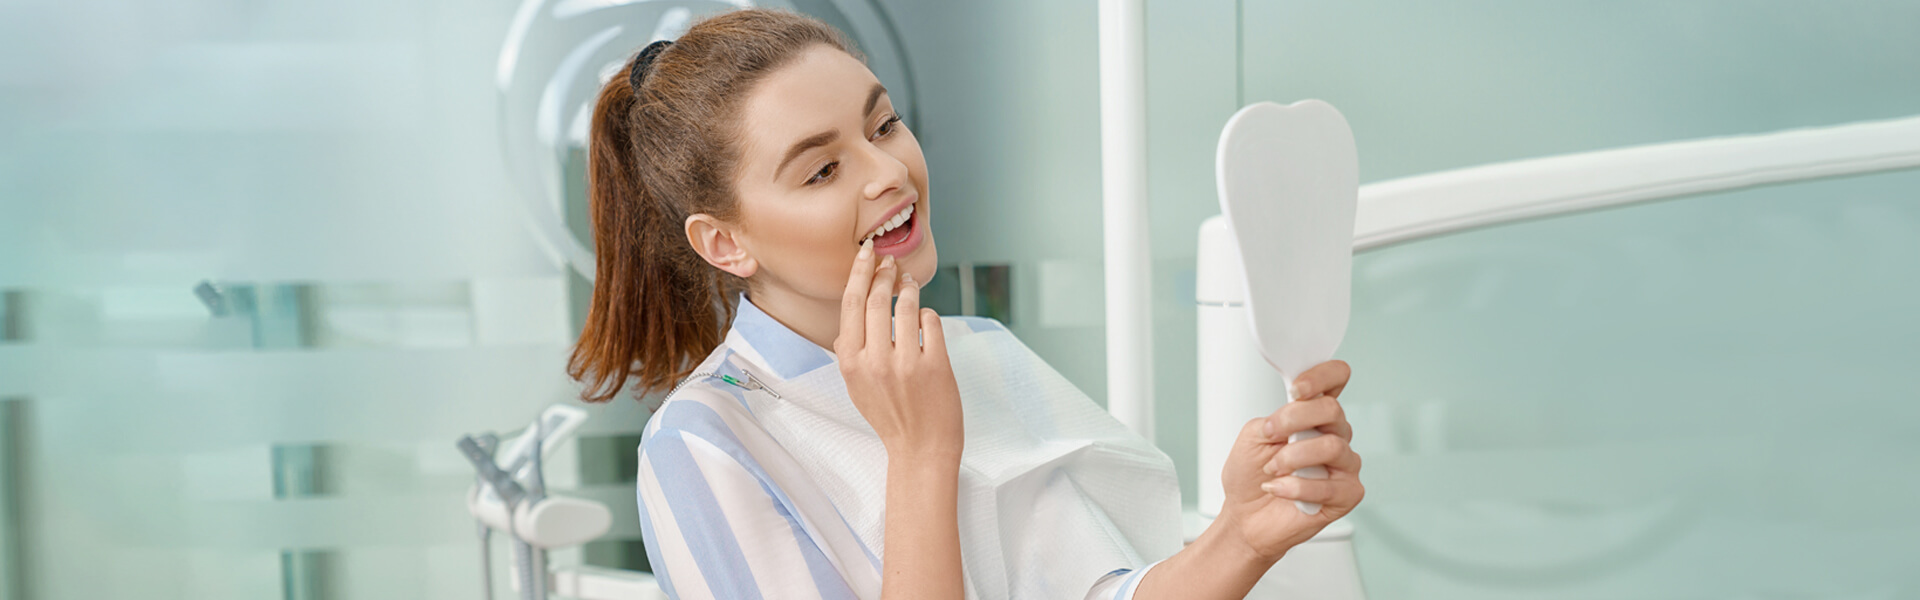 Are Dental Sealants Worth the Risk?